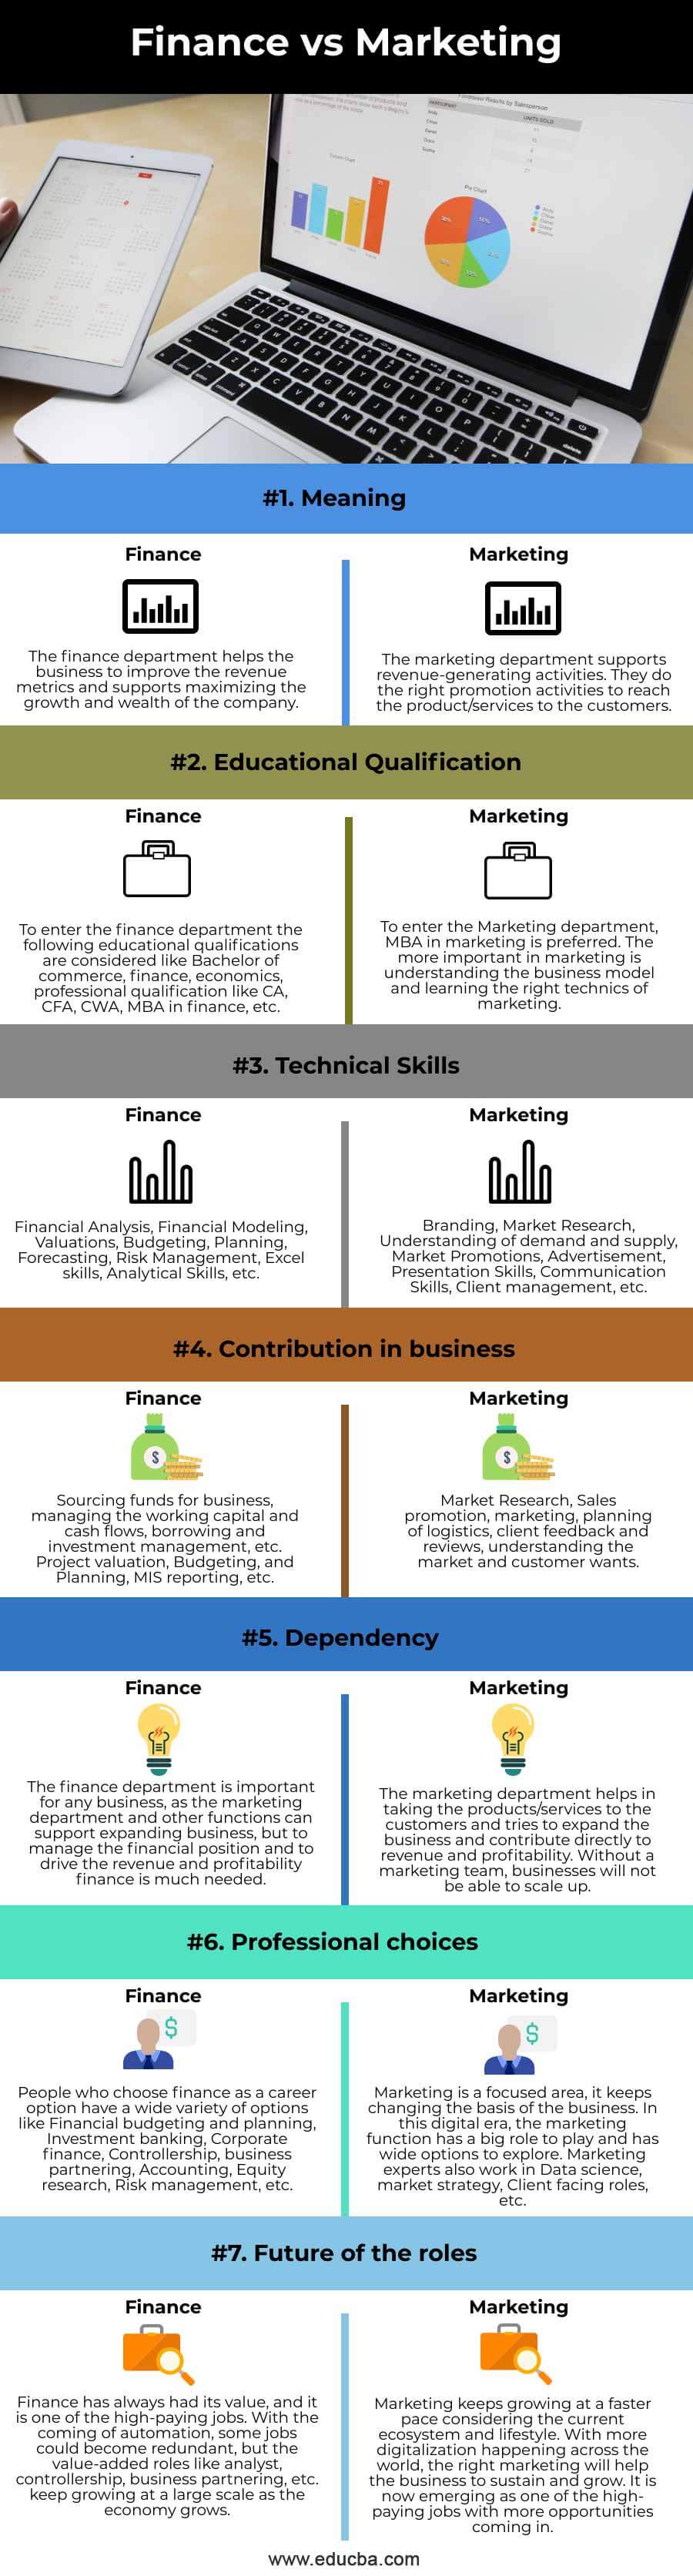 Finance-vs-Marketing-info